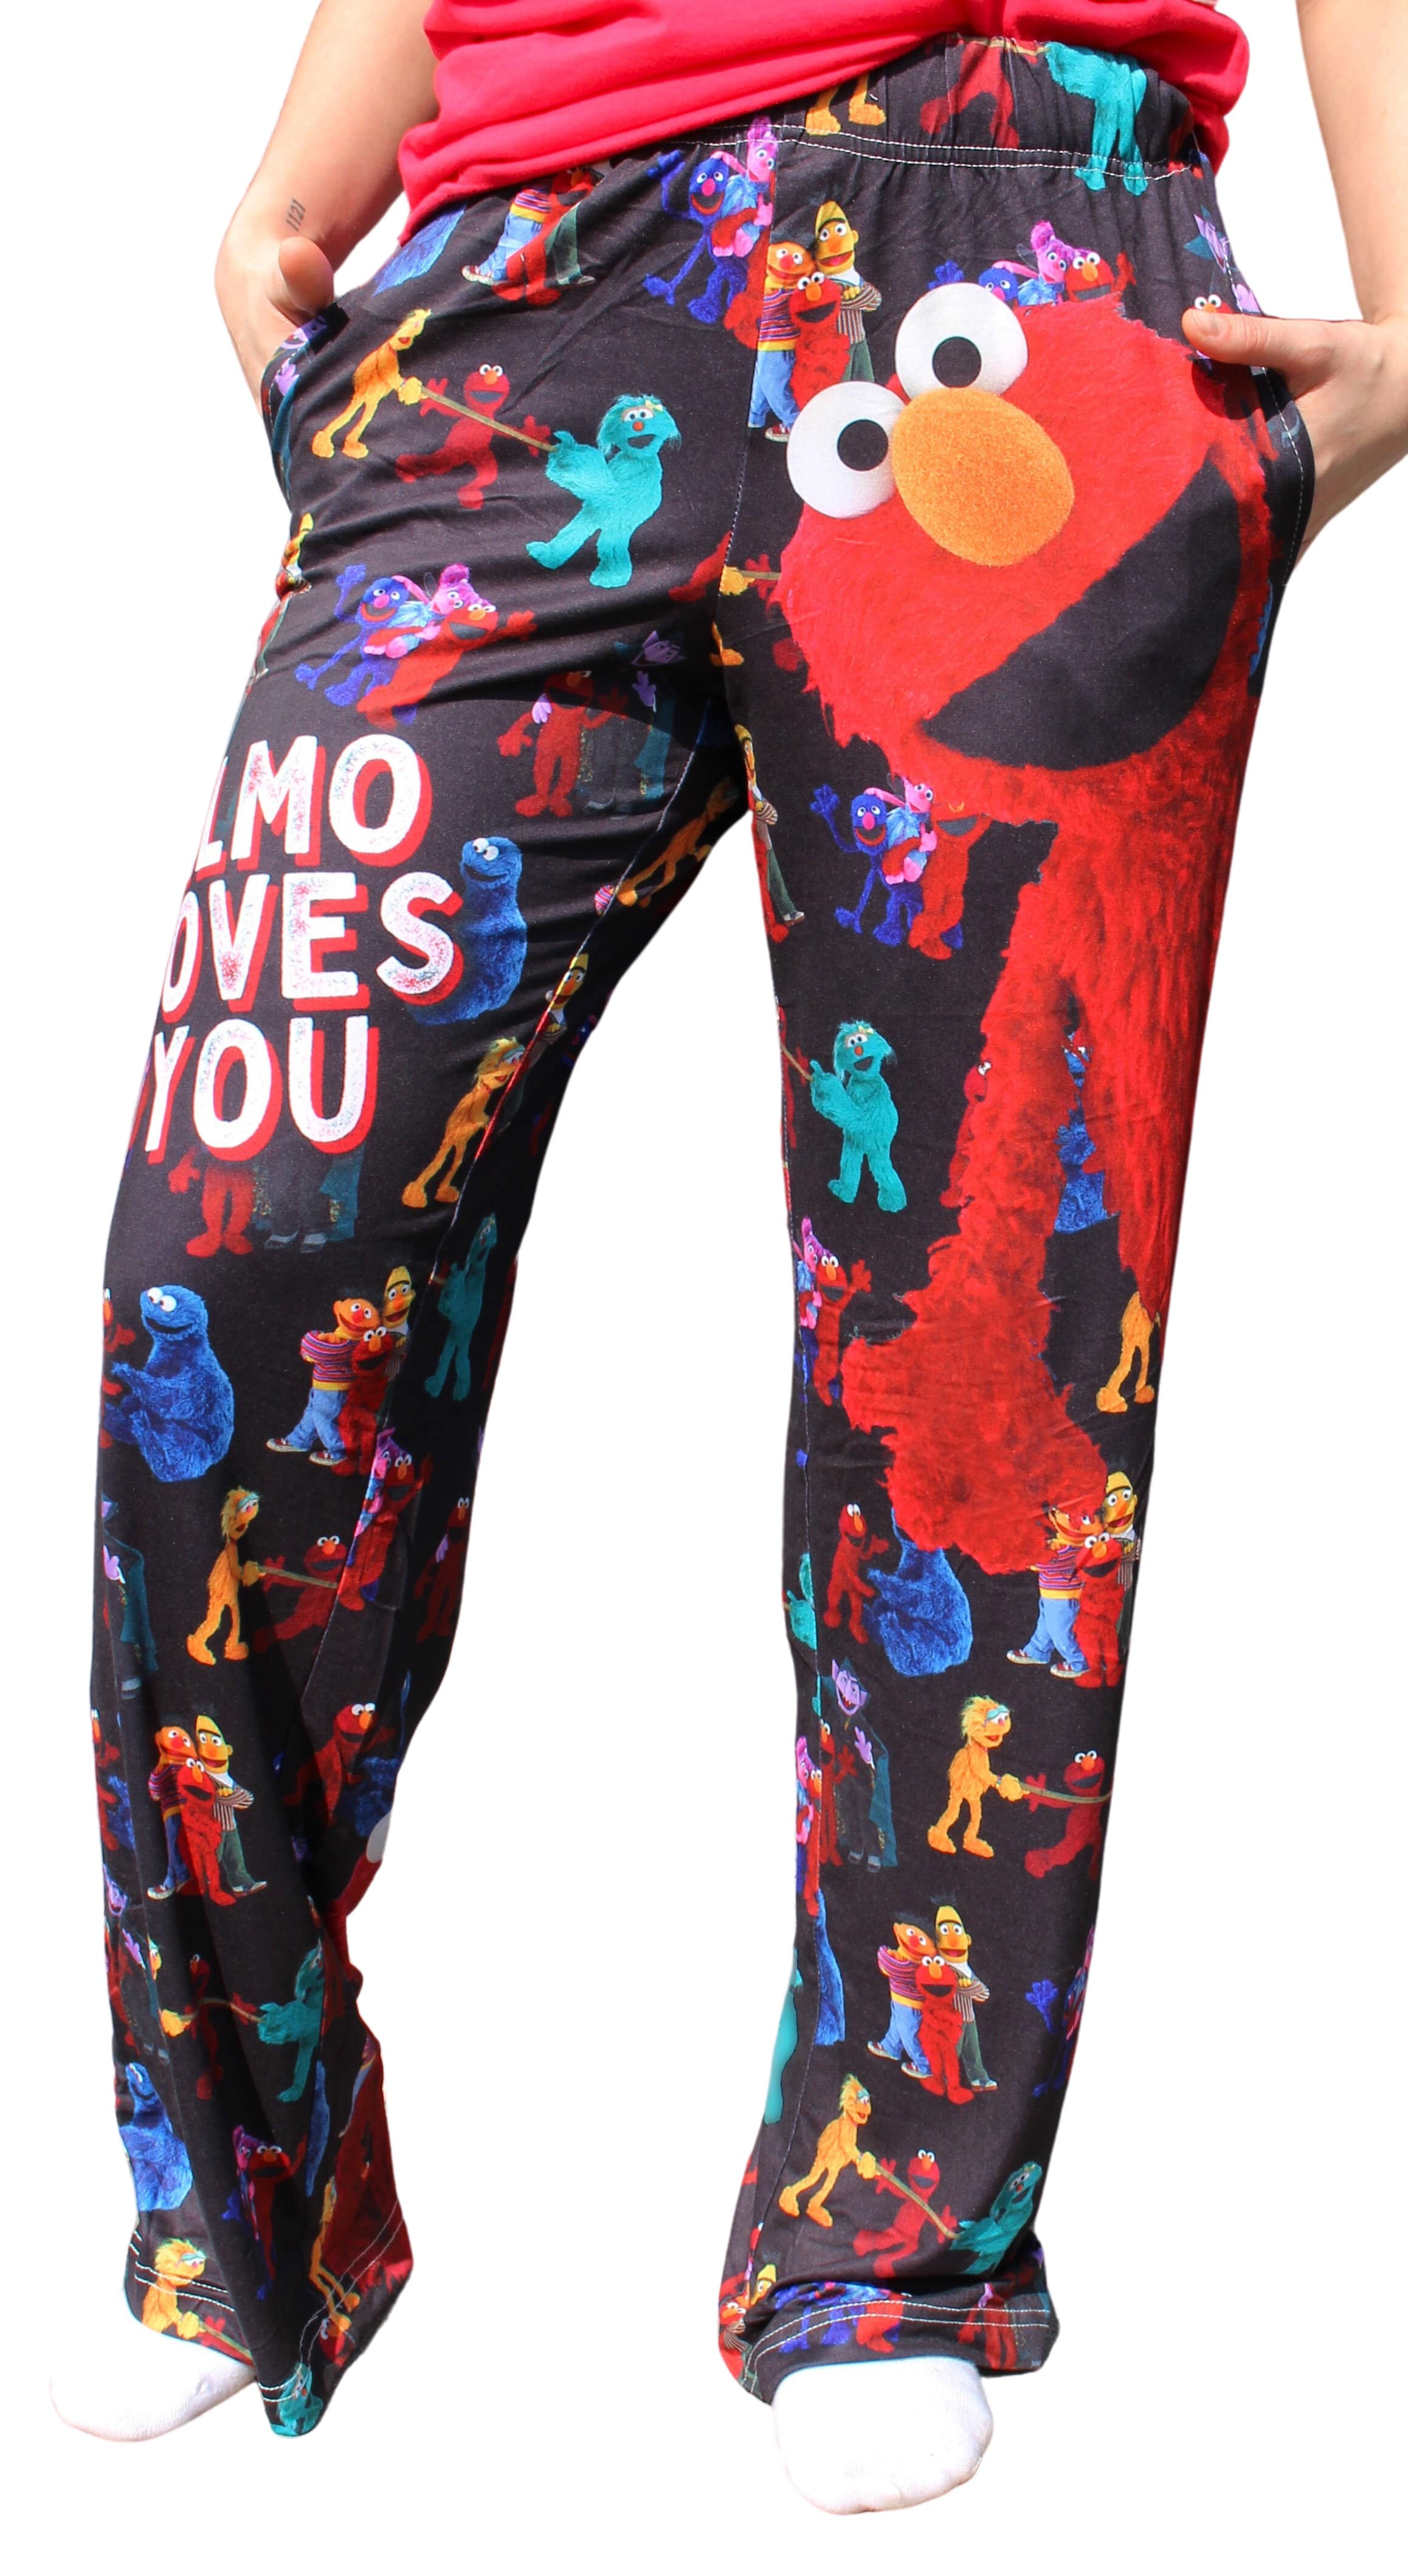 Sesame Street Elmo pants on model front view